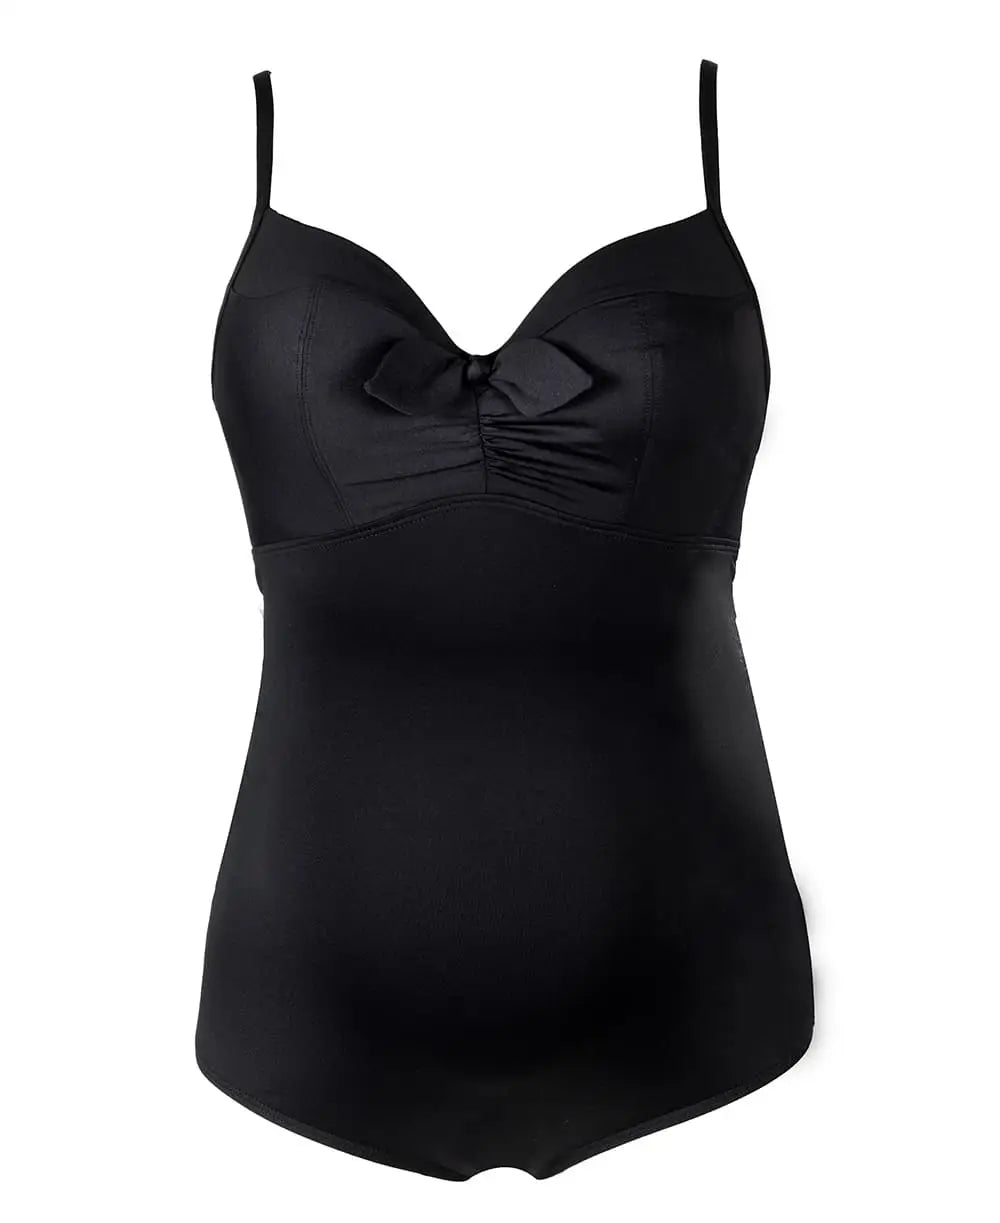 Underwired maternity swimsuit Monaco black - Swimsuit